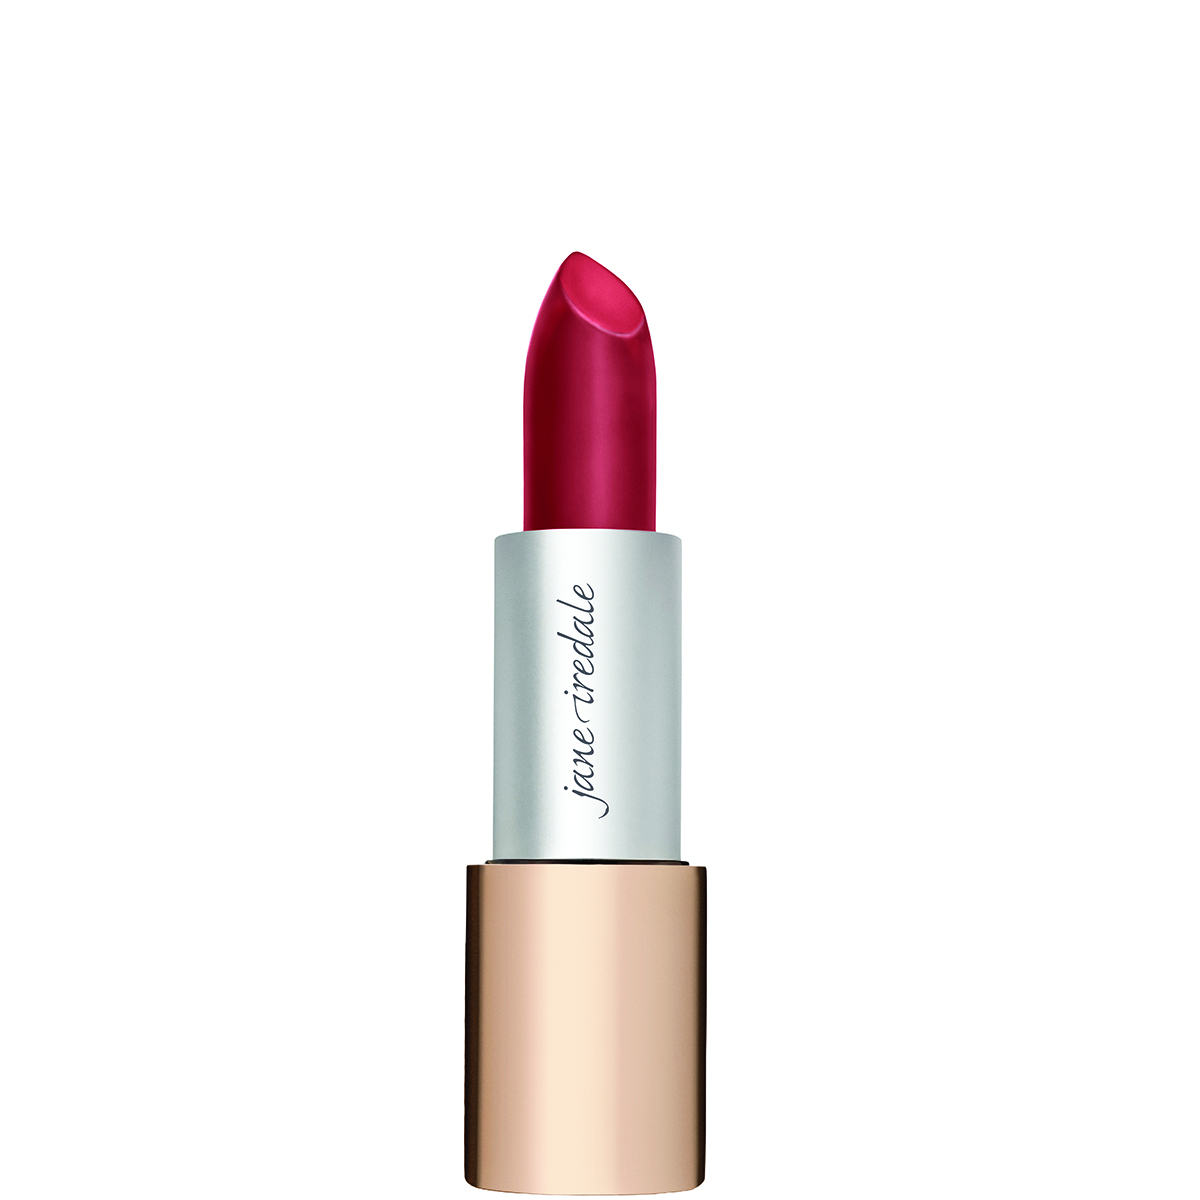 Jane Iredale Triple Luxe Long Lasting Naturally Moist Lipstick Megan